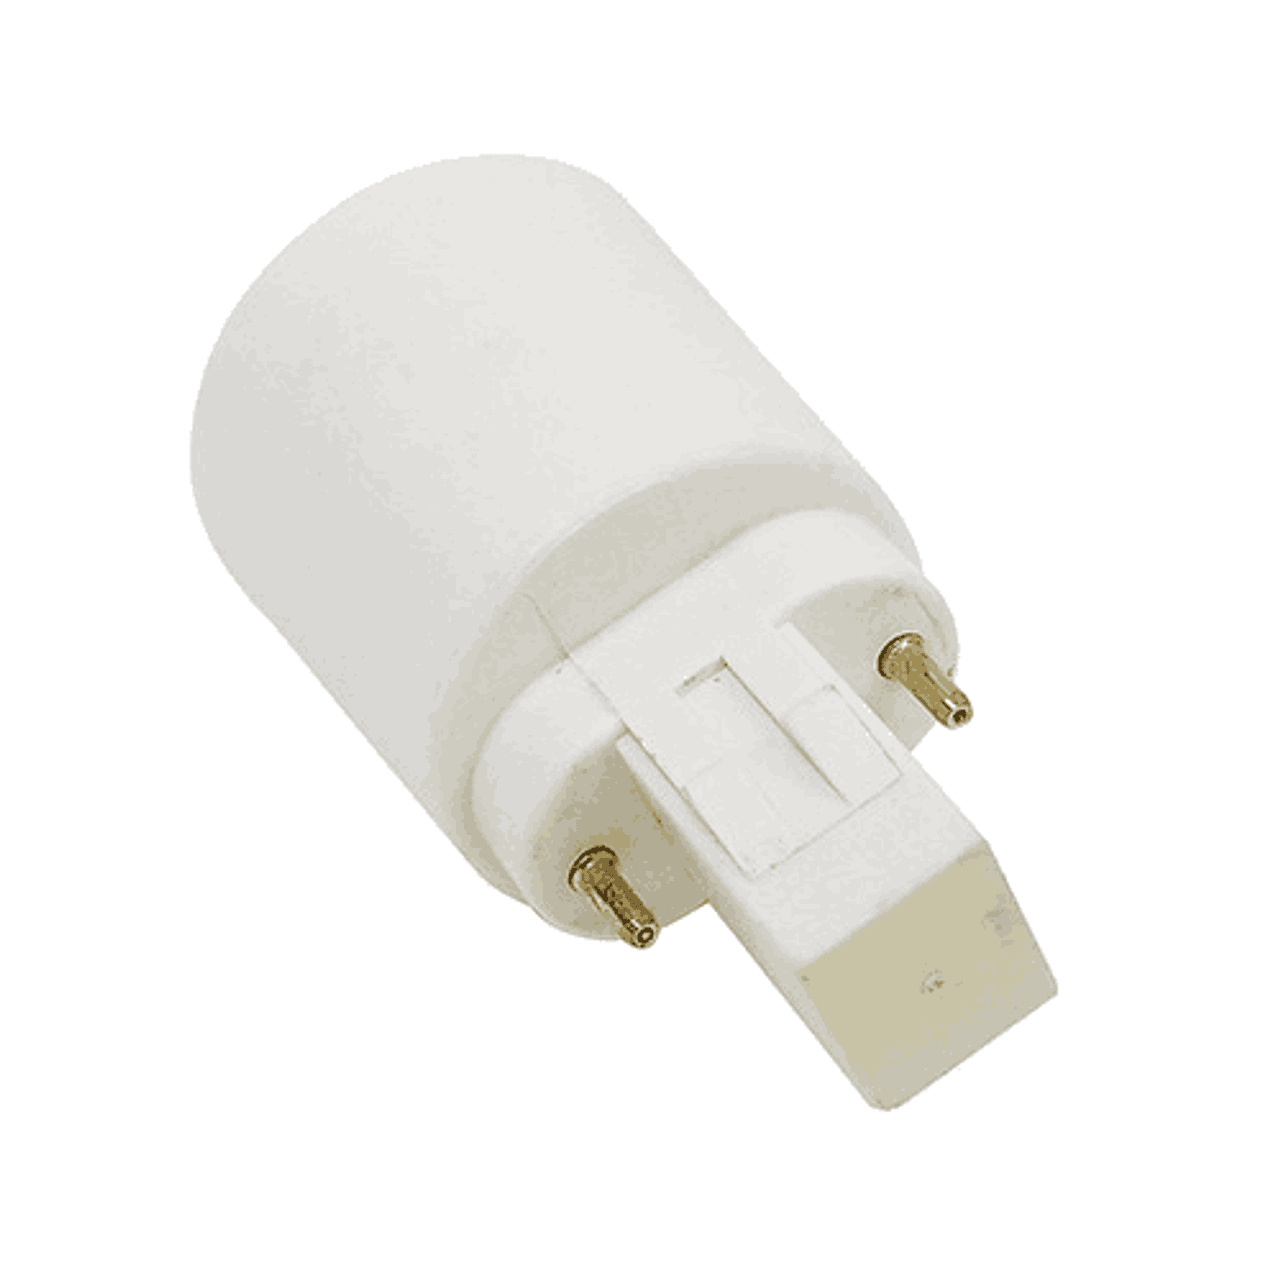 GX23 to E26 Light Bulb Socket Adapter